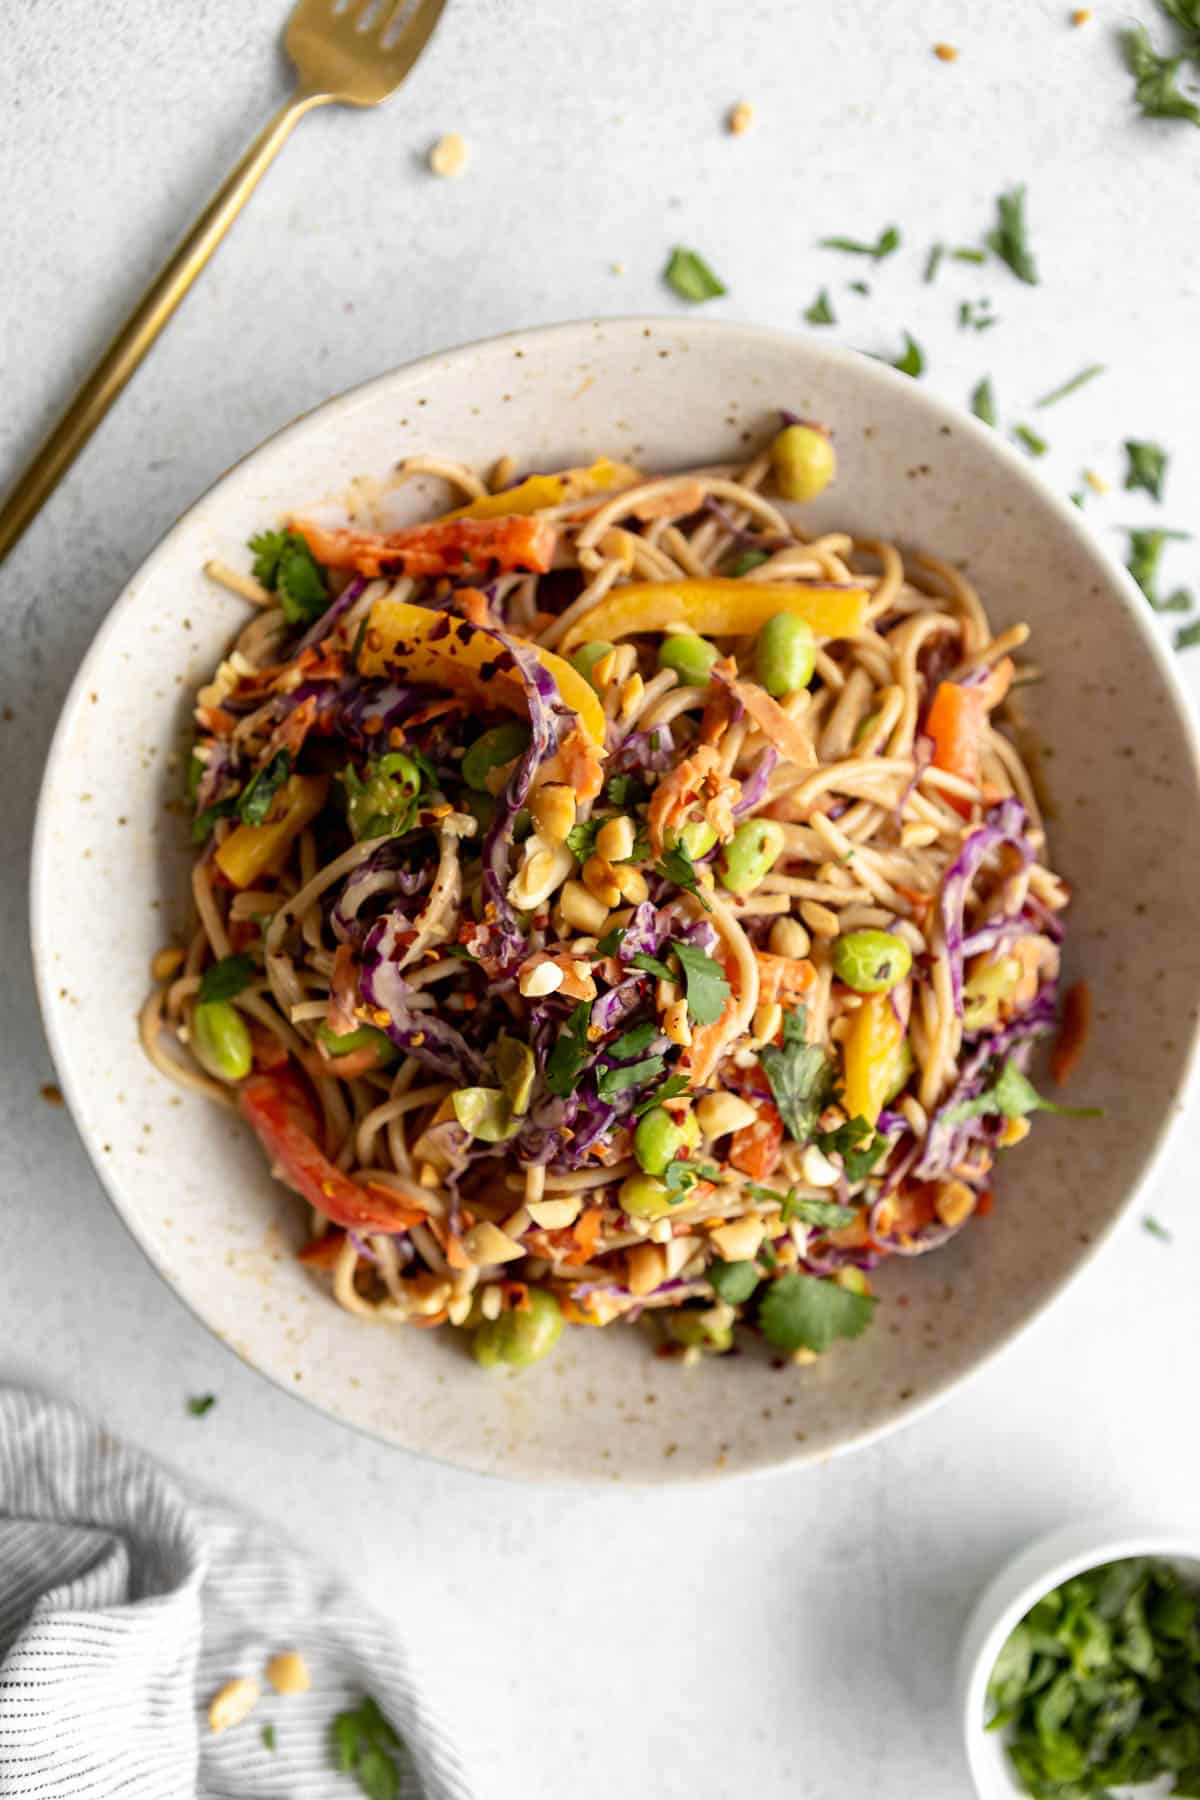 vegan thai noodle salad with veggies and peanuts on top